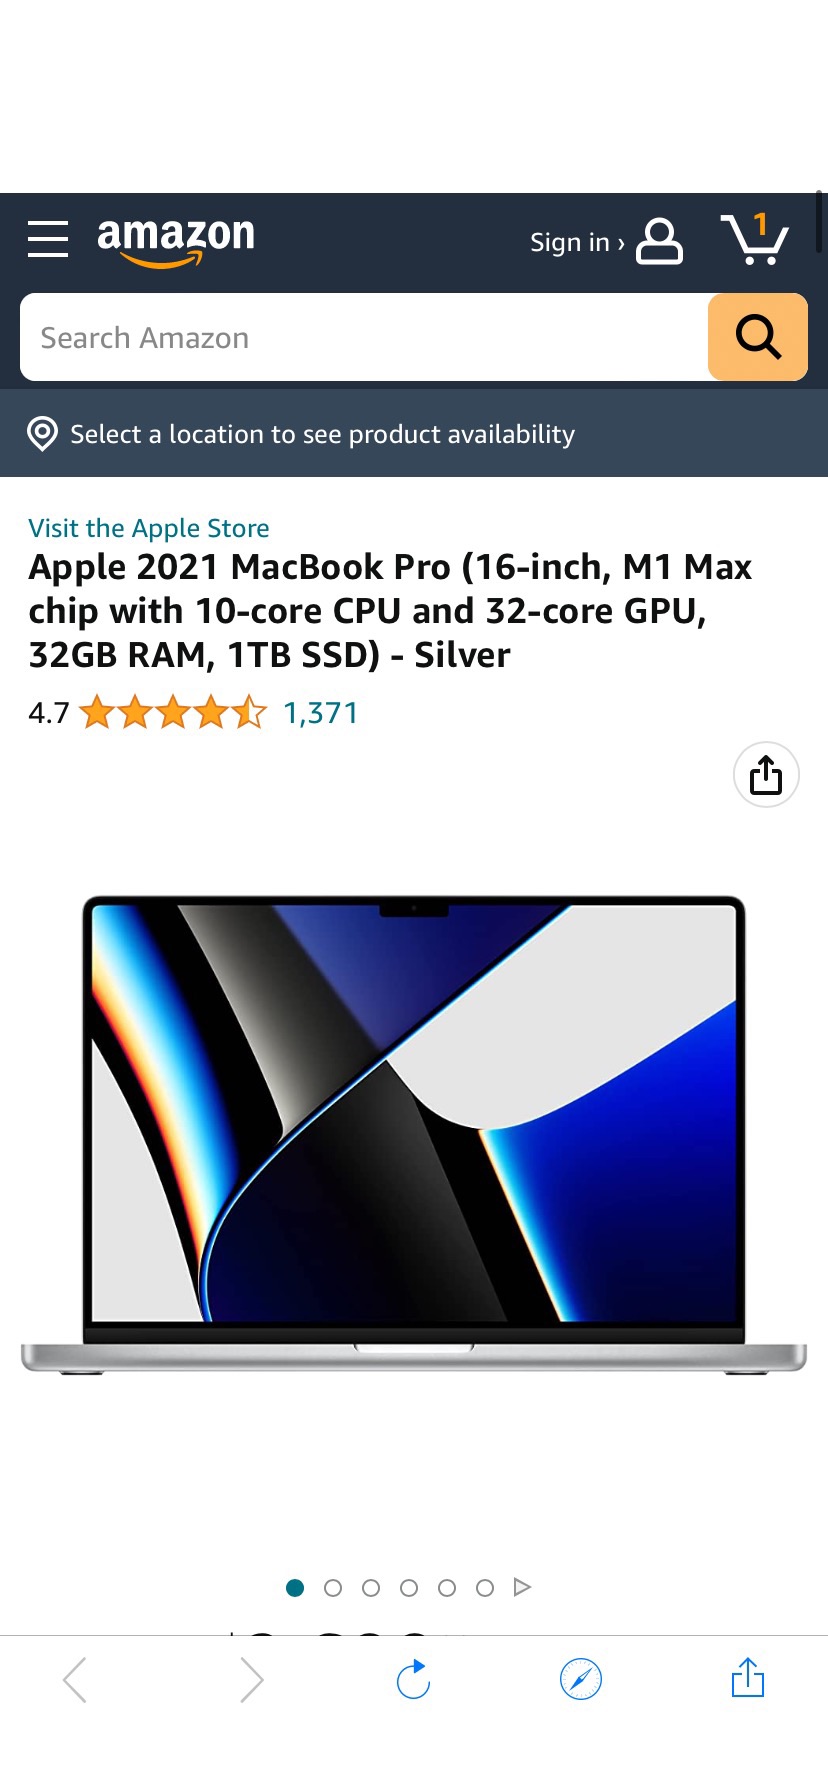 Amazon.com: Apple 2021 MacBook Pro (16-inch, M1 Max chip with 10-core CPU and 32-core GPU, 32GB RAM, 1TB SSD) - Silver : Electronics